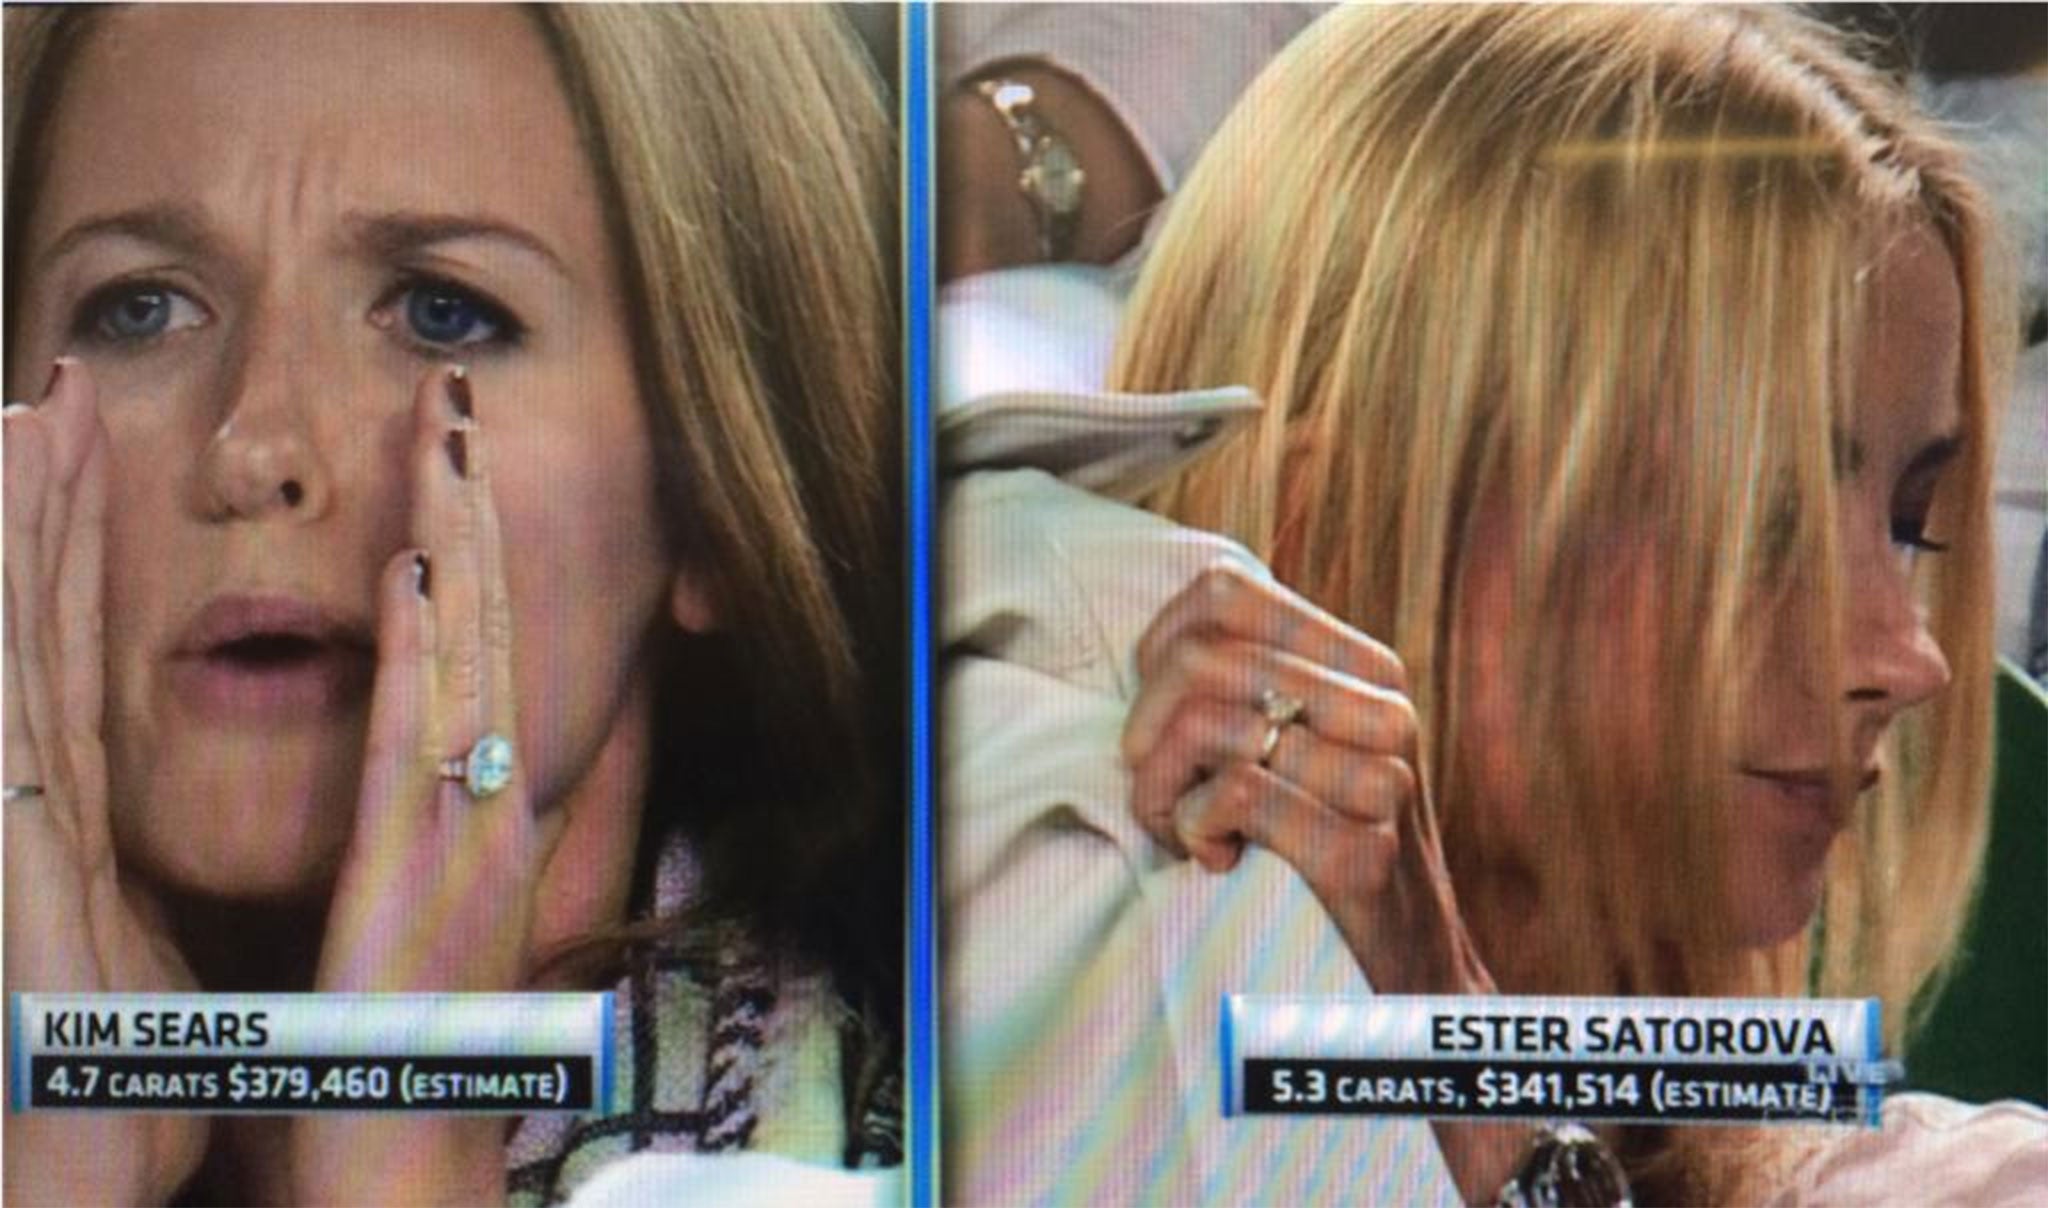 ESPN footage showed a split-screen Murray’s partner Kim Sears and Berdych’s partner Ester Satorova 'sporting' their jewellery